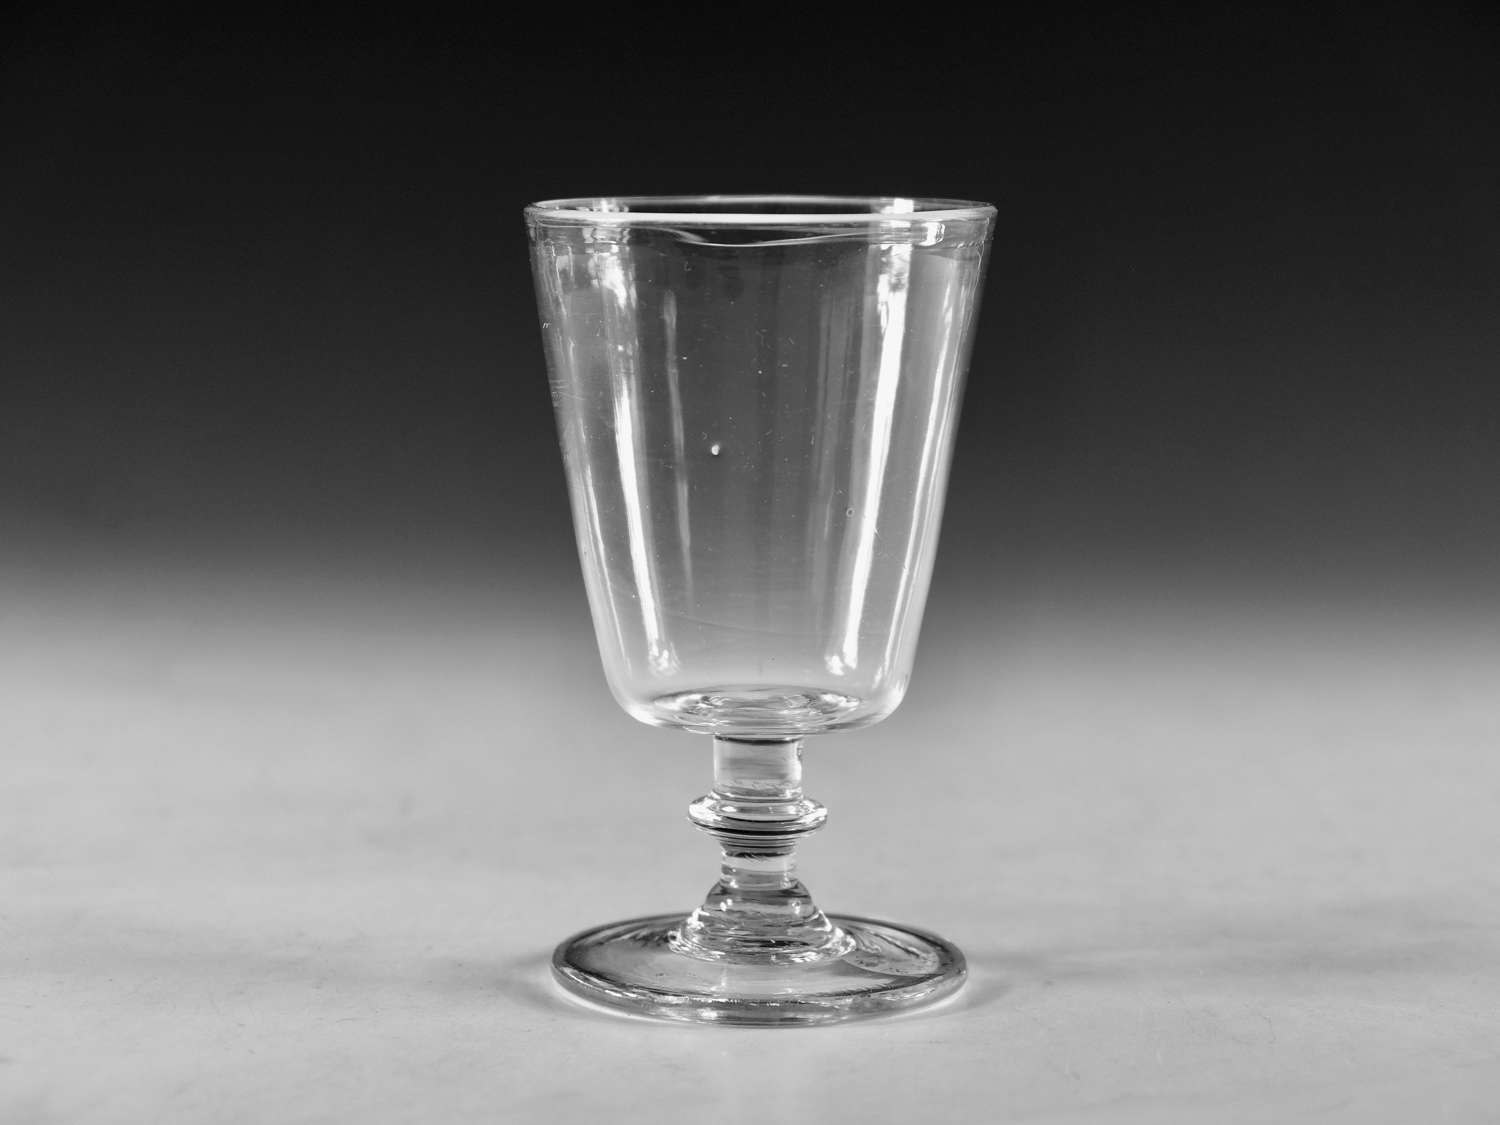 Antique glass - rummer c1800